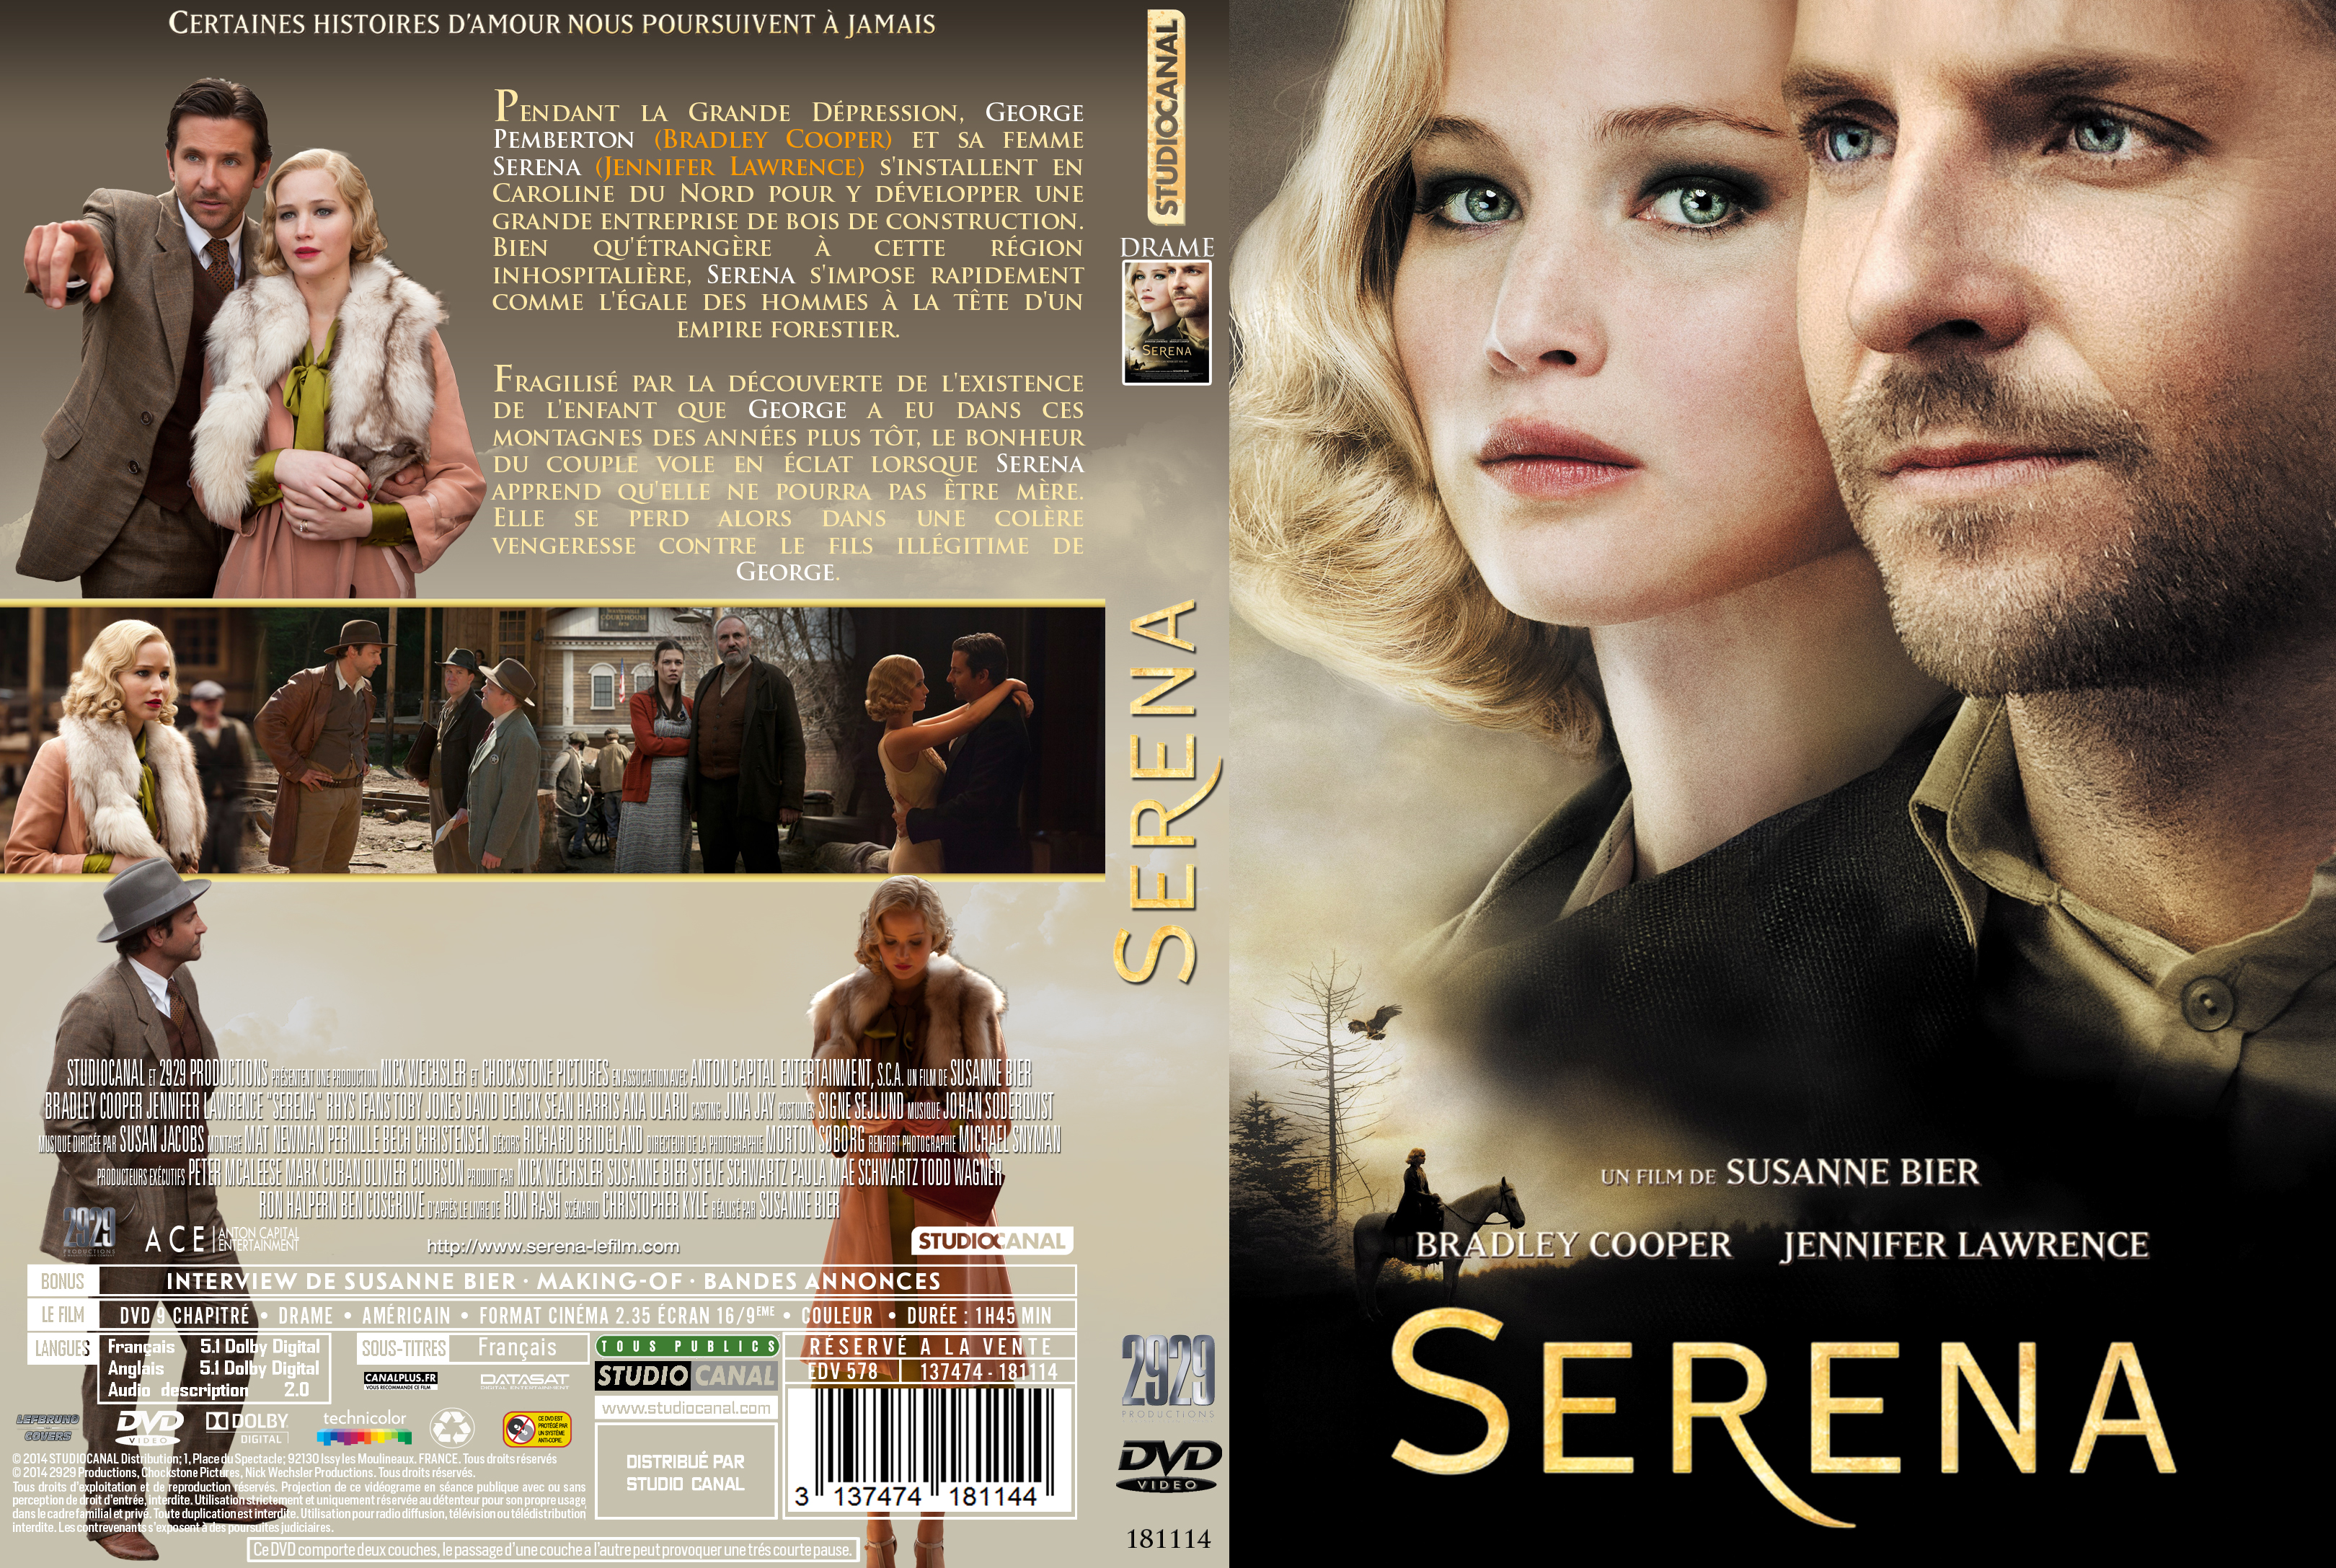 Jaquette DVD Serena custom